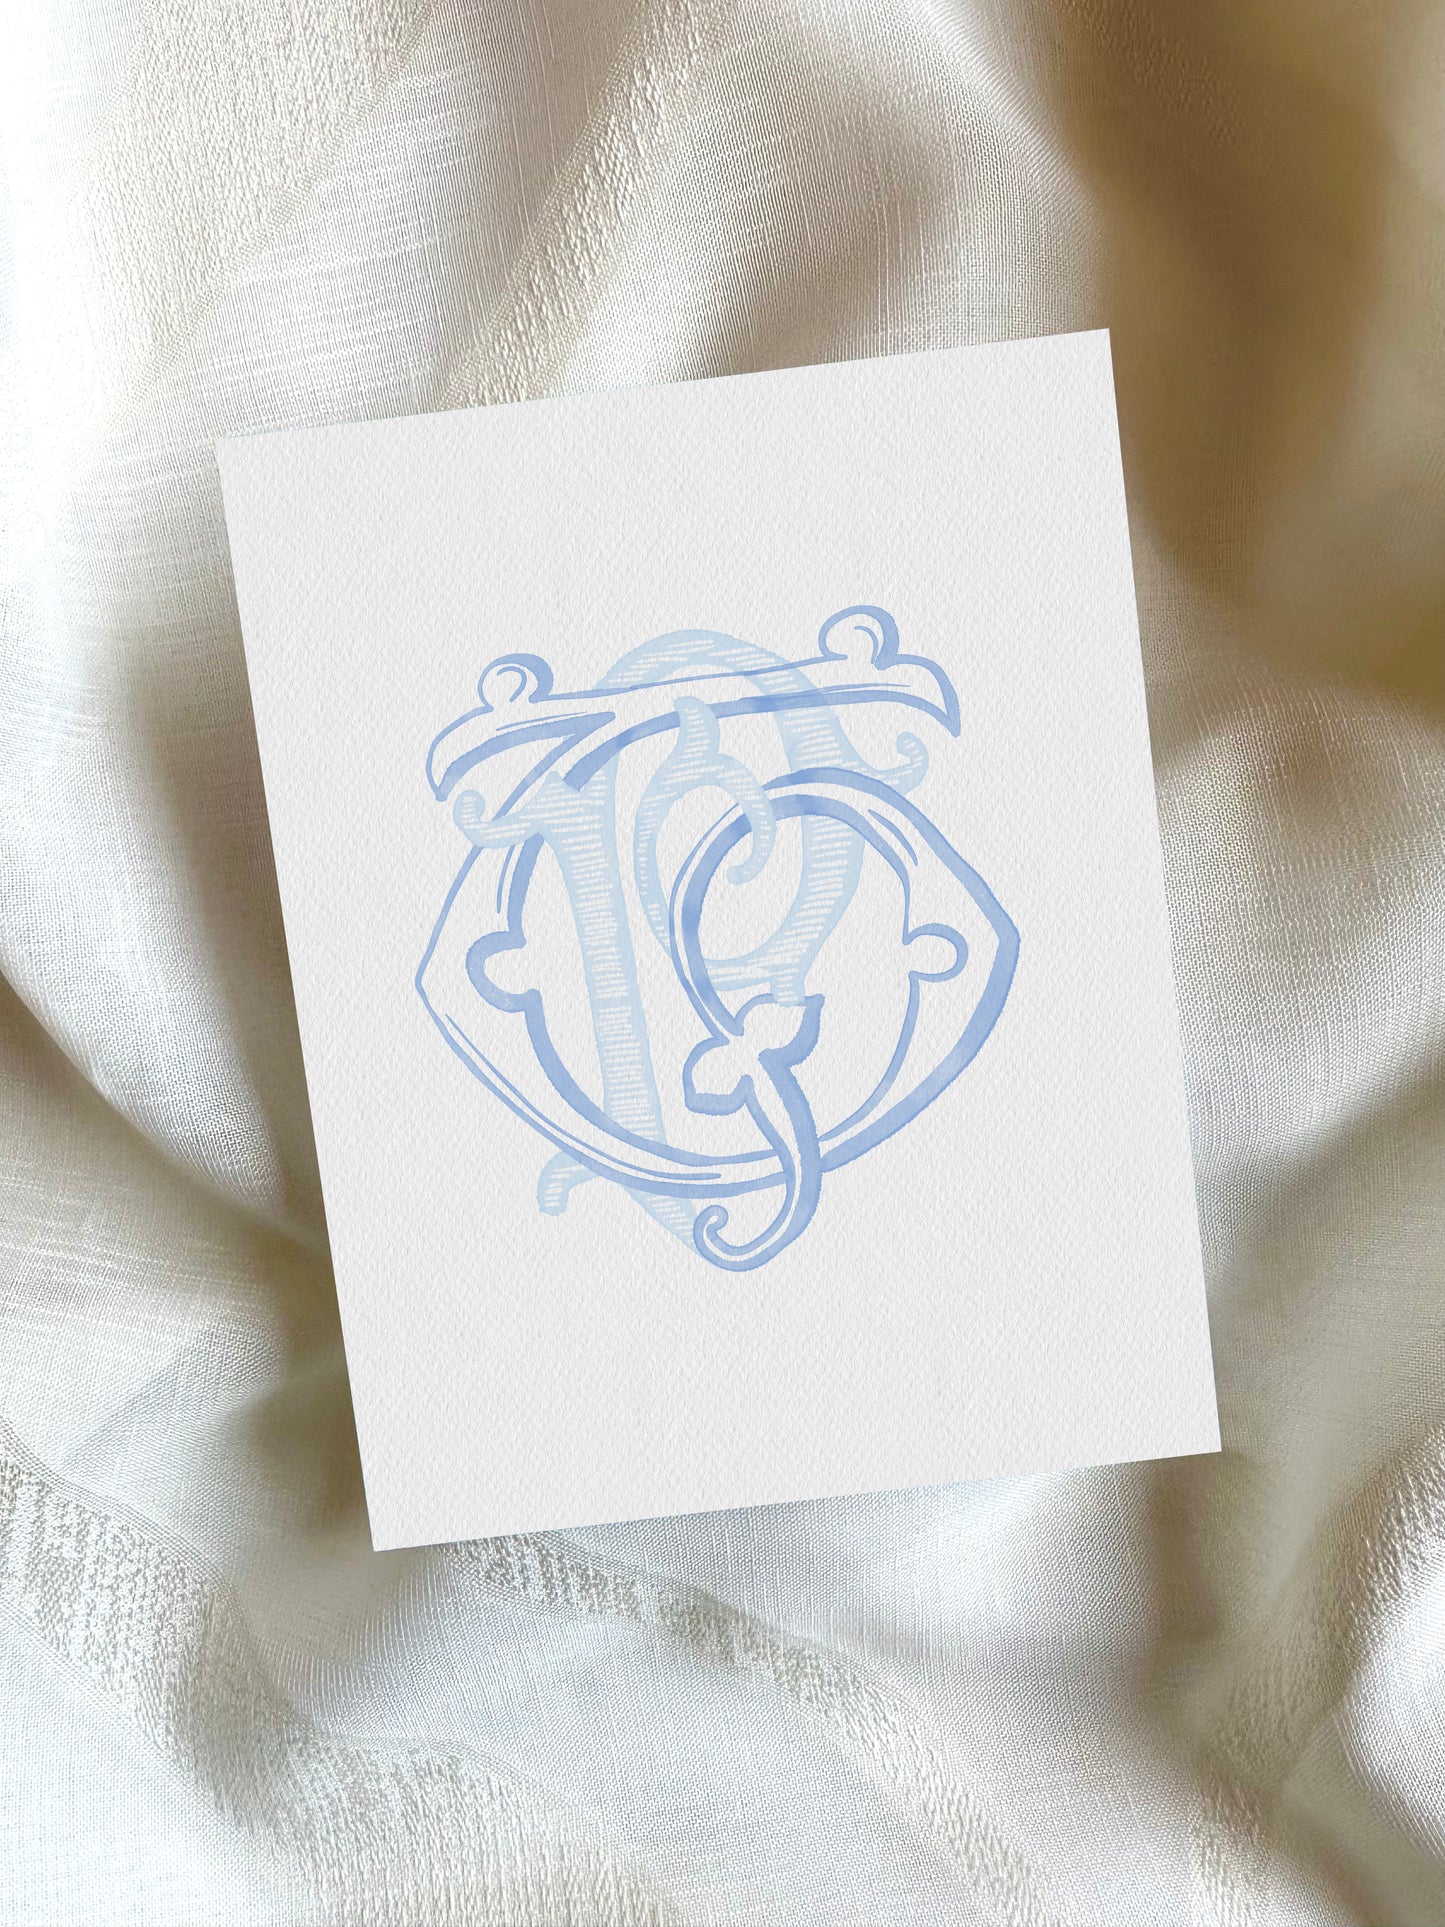 2 Letter Monogram with Letters PT TP | Digital Download - Wedding Monogram SVG, Personal Logo, Wedding Logo for Wedding Invitations The Wedding Crest Lab